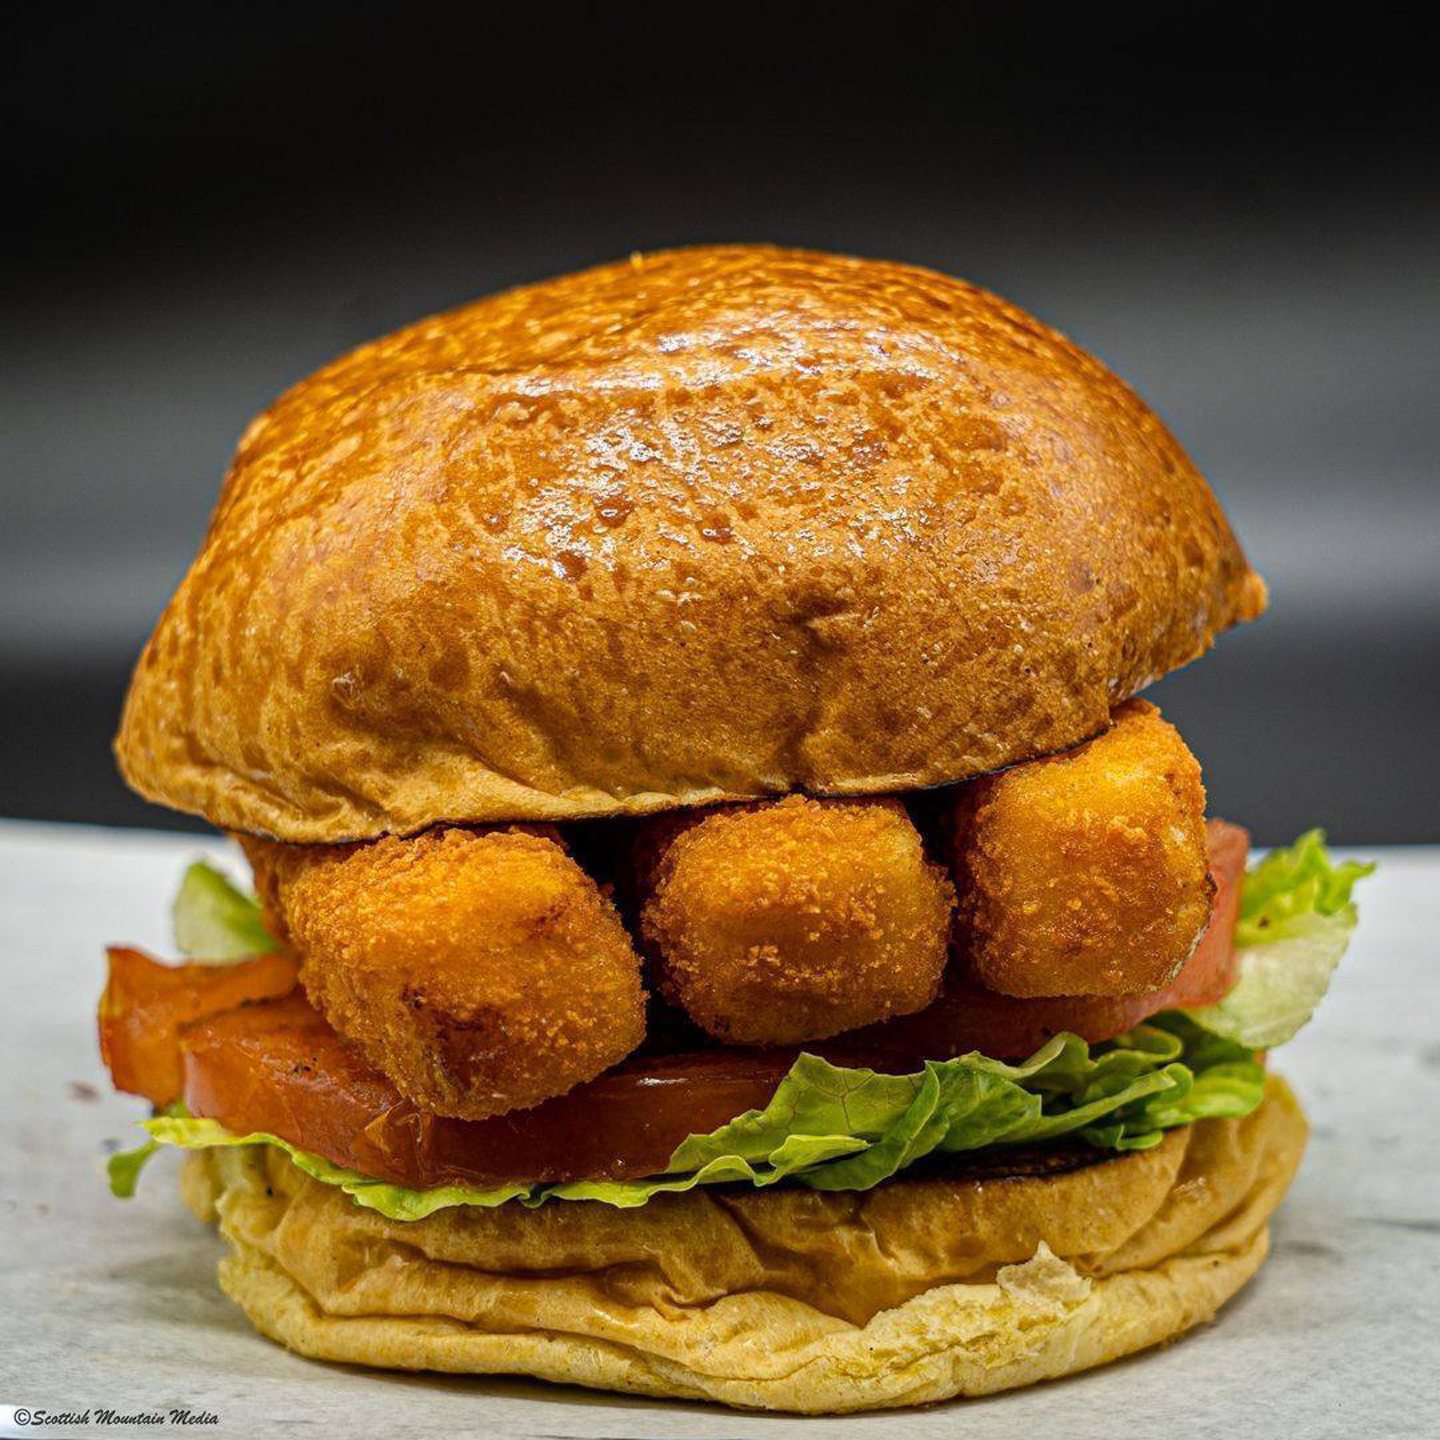 A Velar 'O' Fish burger from Dunecht Diner